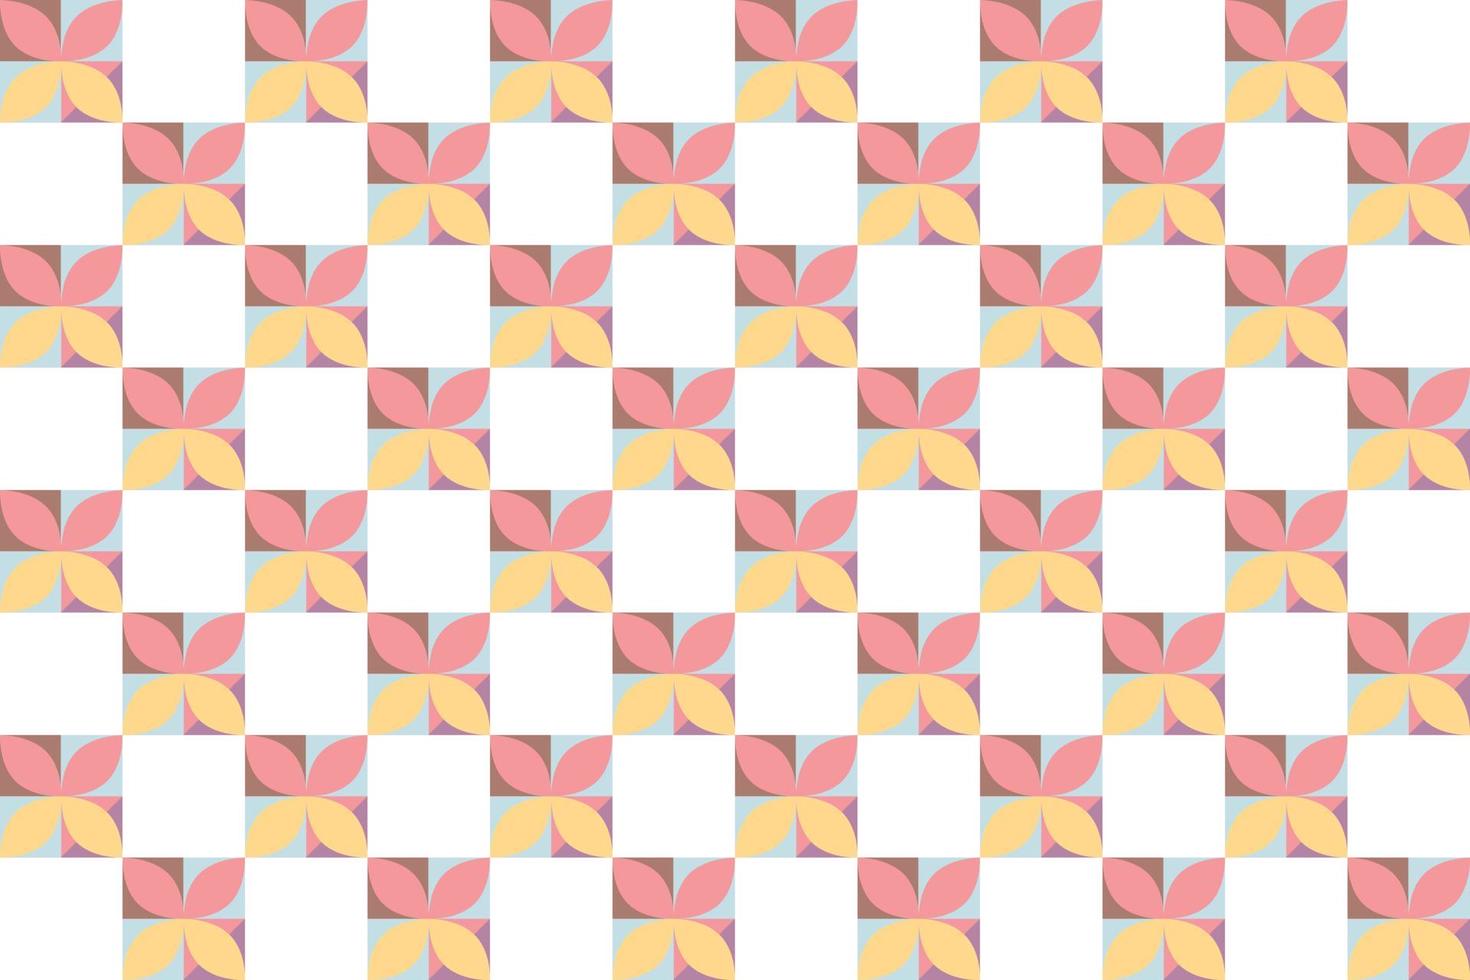 Checker Pattern Fabric is a Multi square within the check pattern Multi Colors where a single checker vector